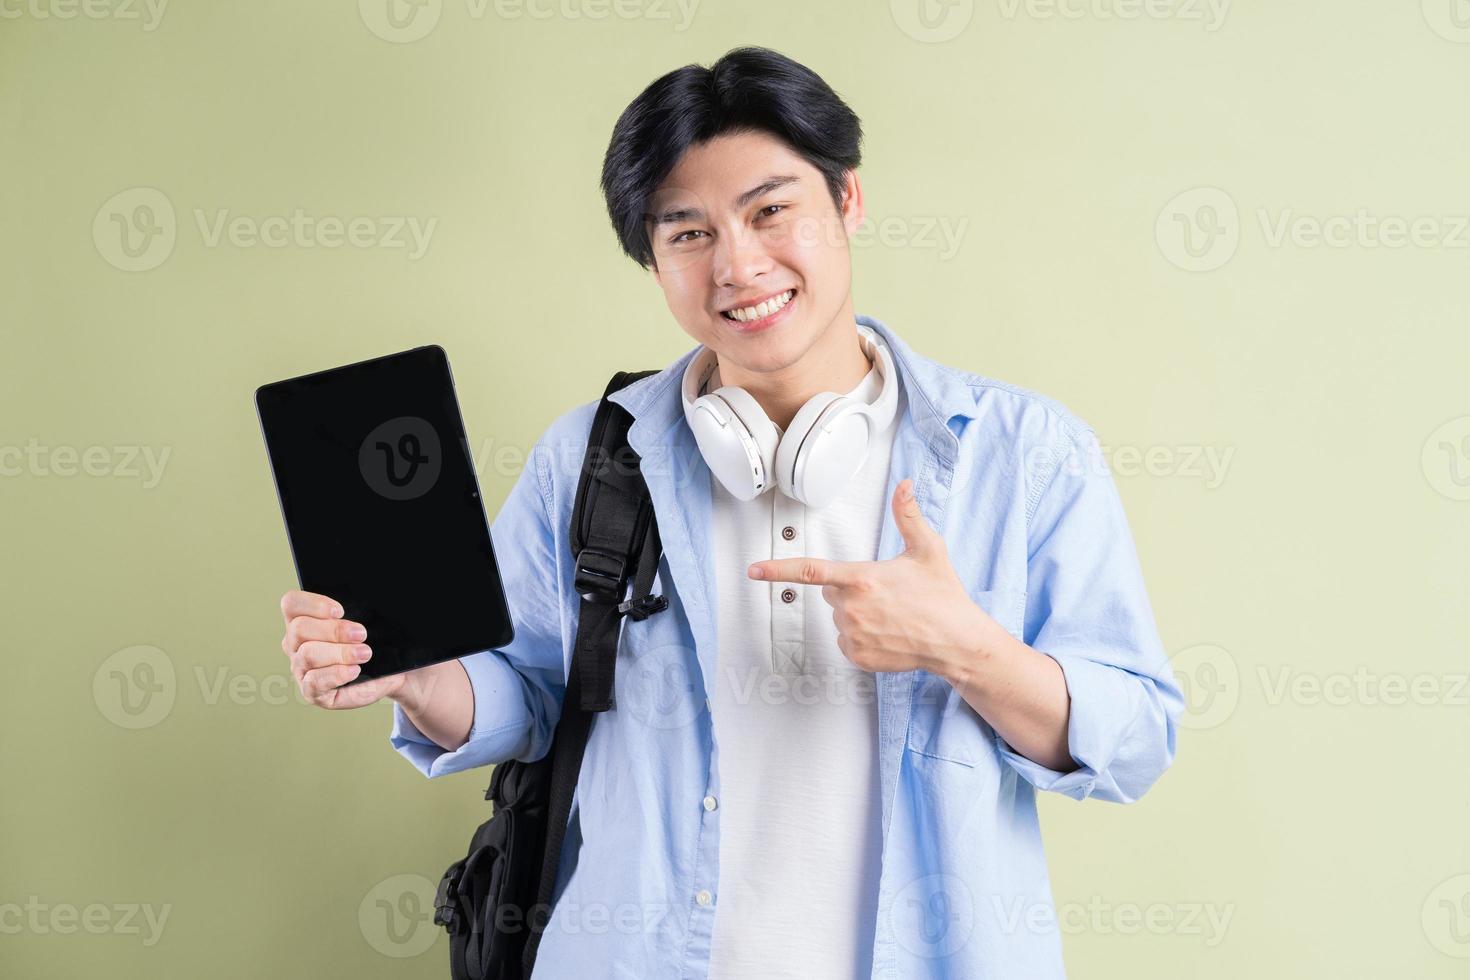 manlig asiatisk student pekar fingret mot tabletten med en tom skärm foto